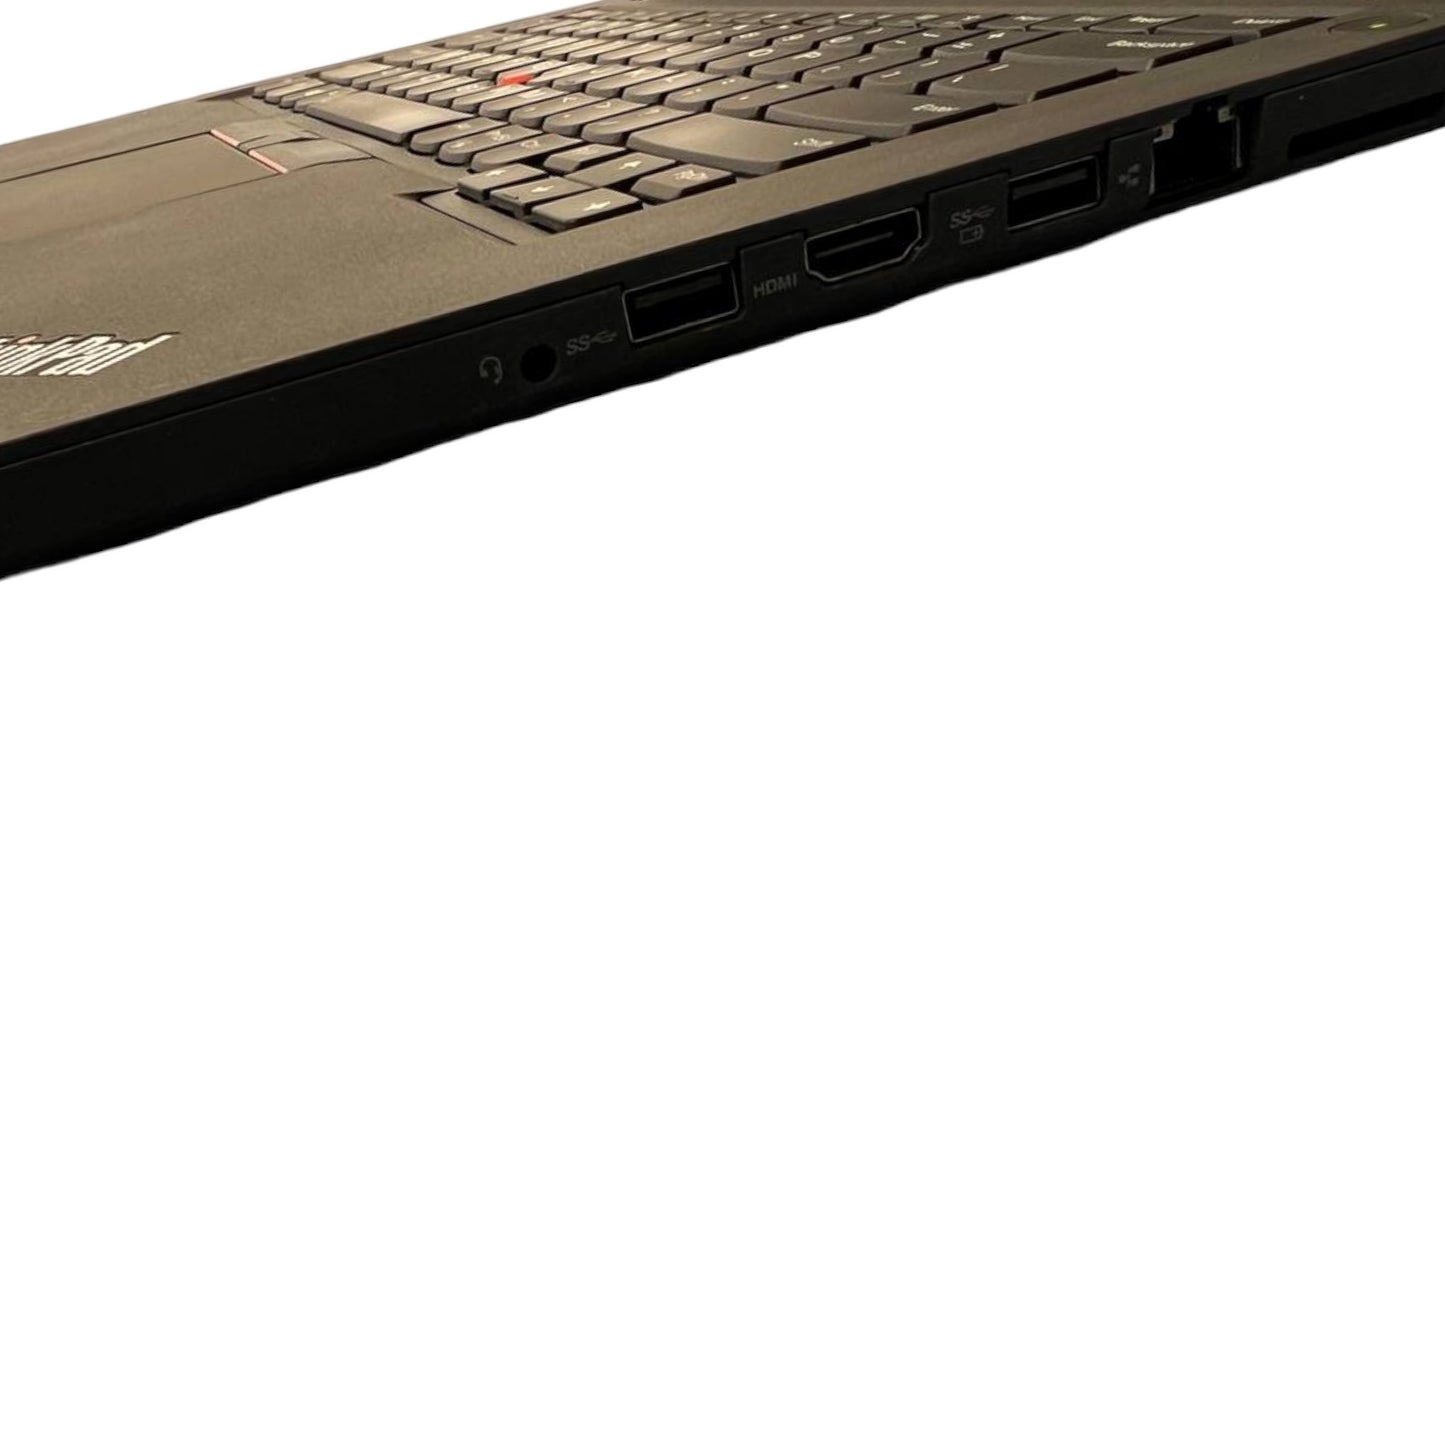 Lenovo Thinkpad T470, con Intel Core i5-7300u, 2370910R4